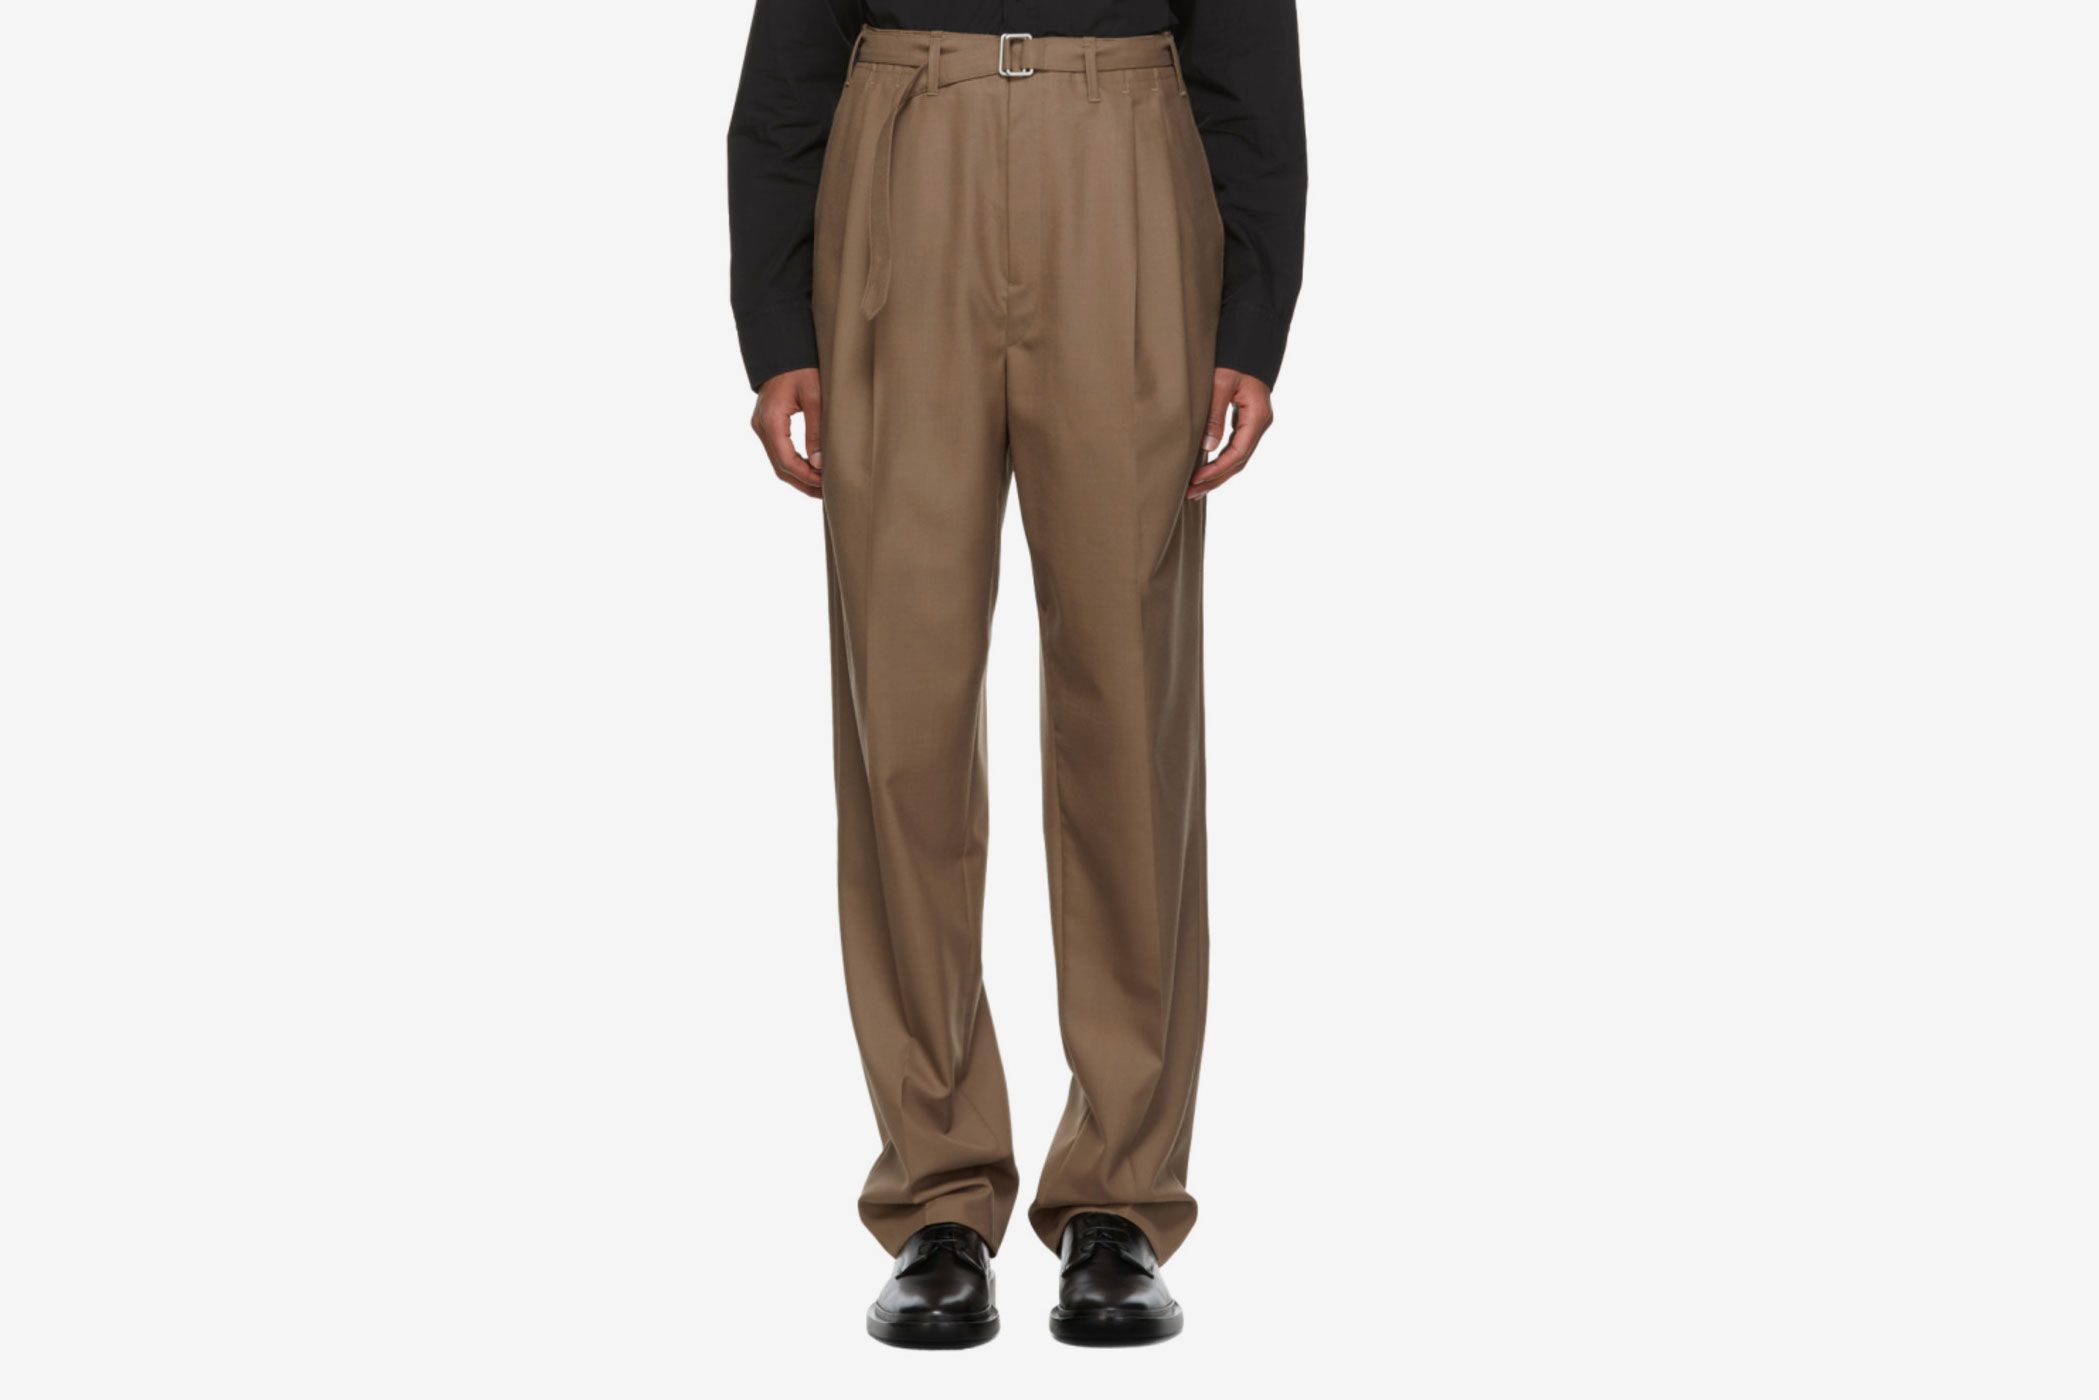 Howme Men Trim-Fit No Iron Comfort Comfort Soft Casual Pants Trousers